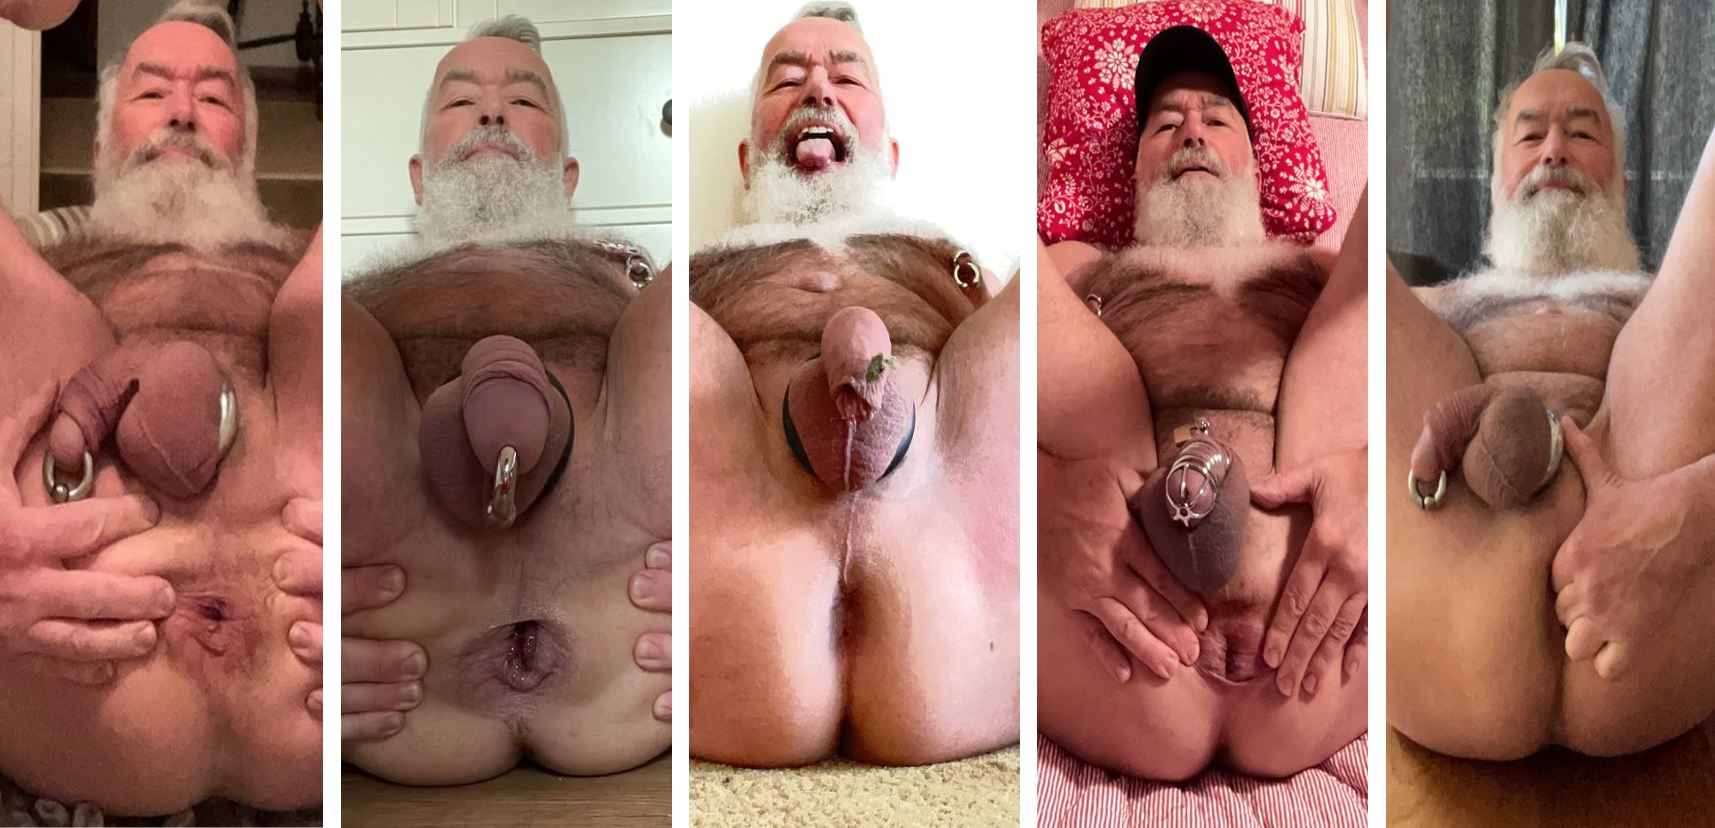 Naked faggot Leslie Leijenhorst shows his holes